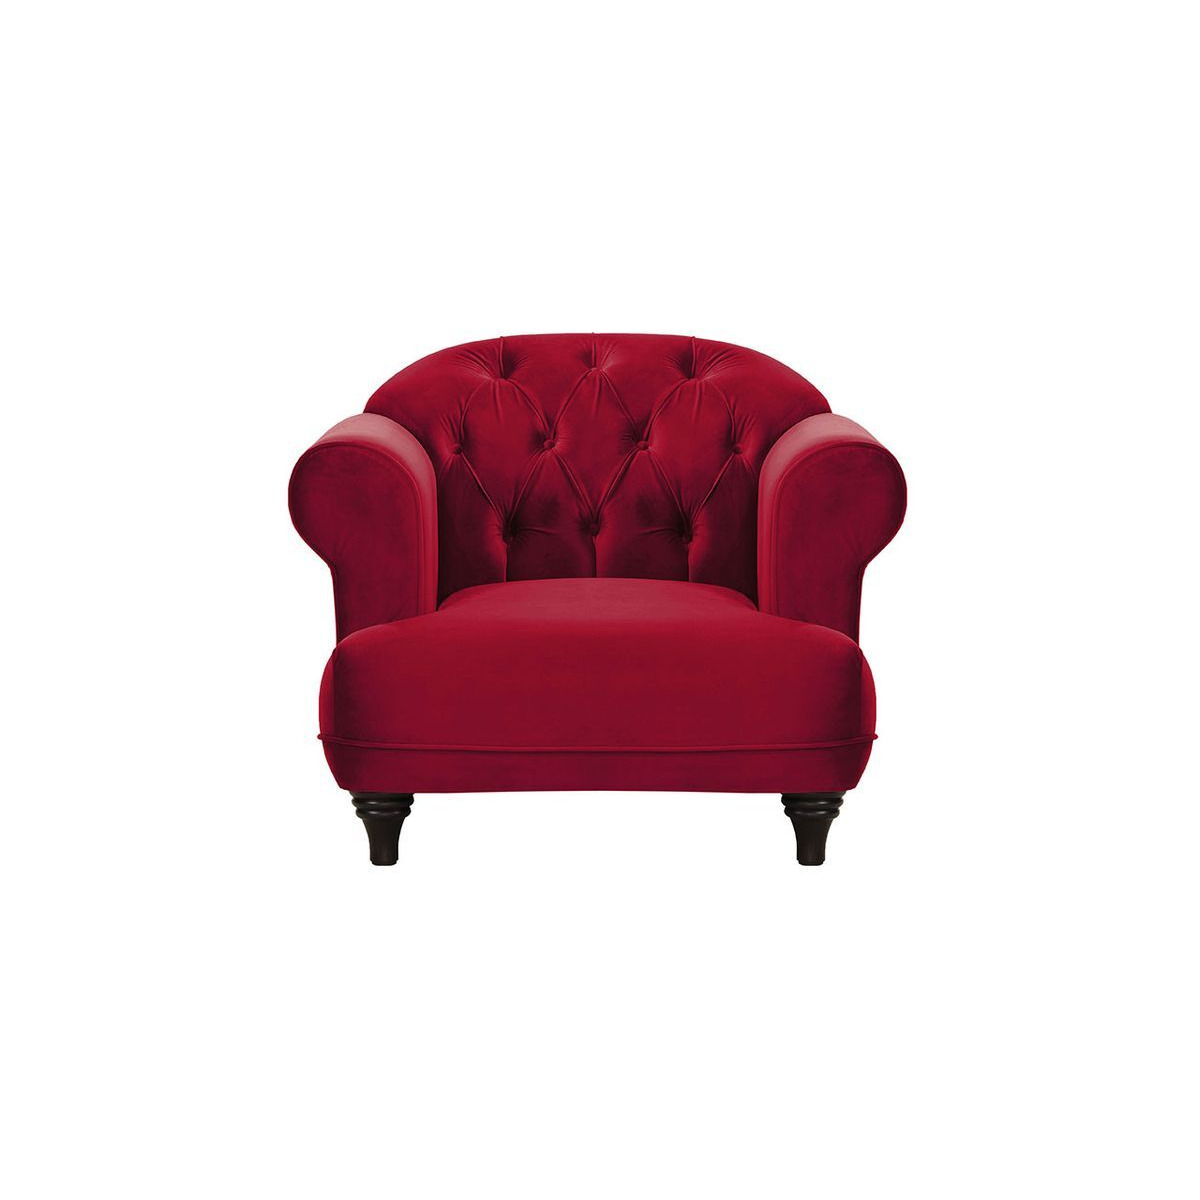 Harto Armchair, dark red - image 1